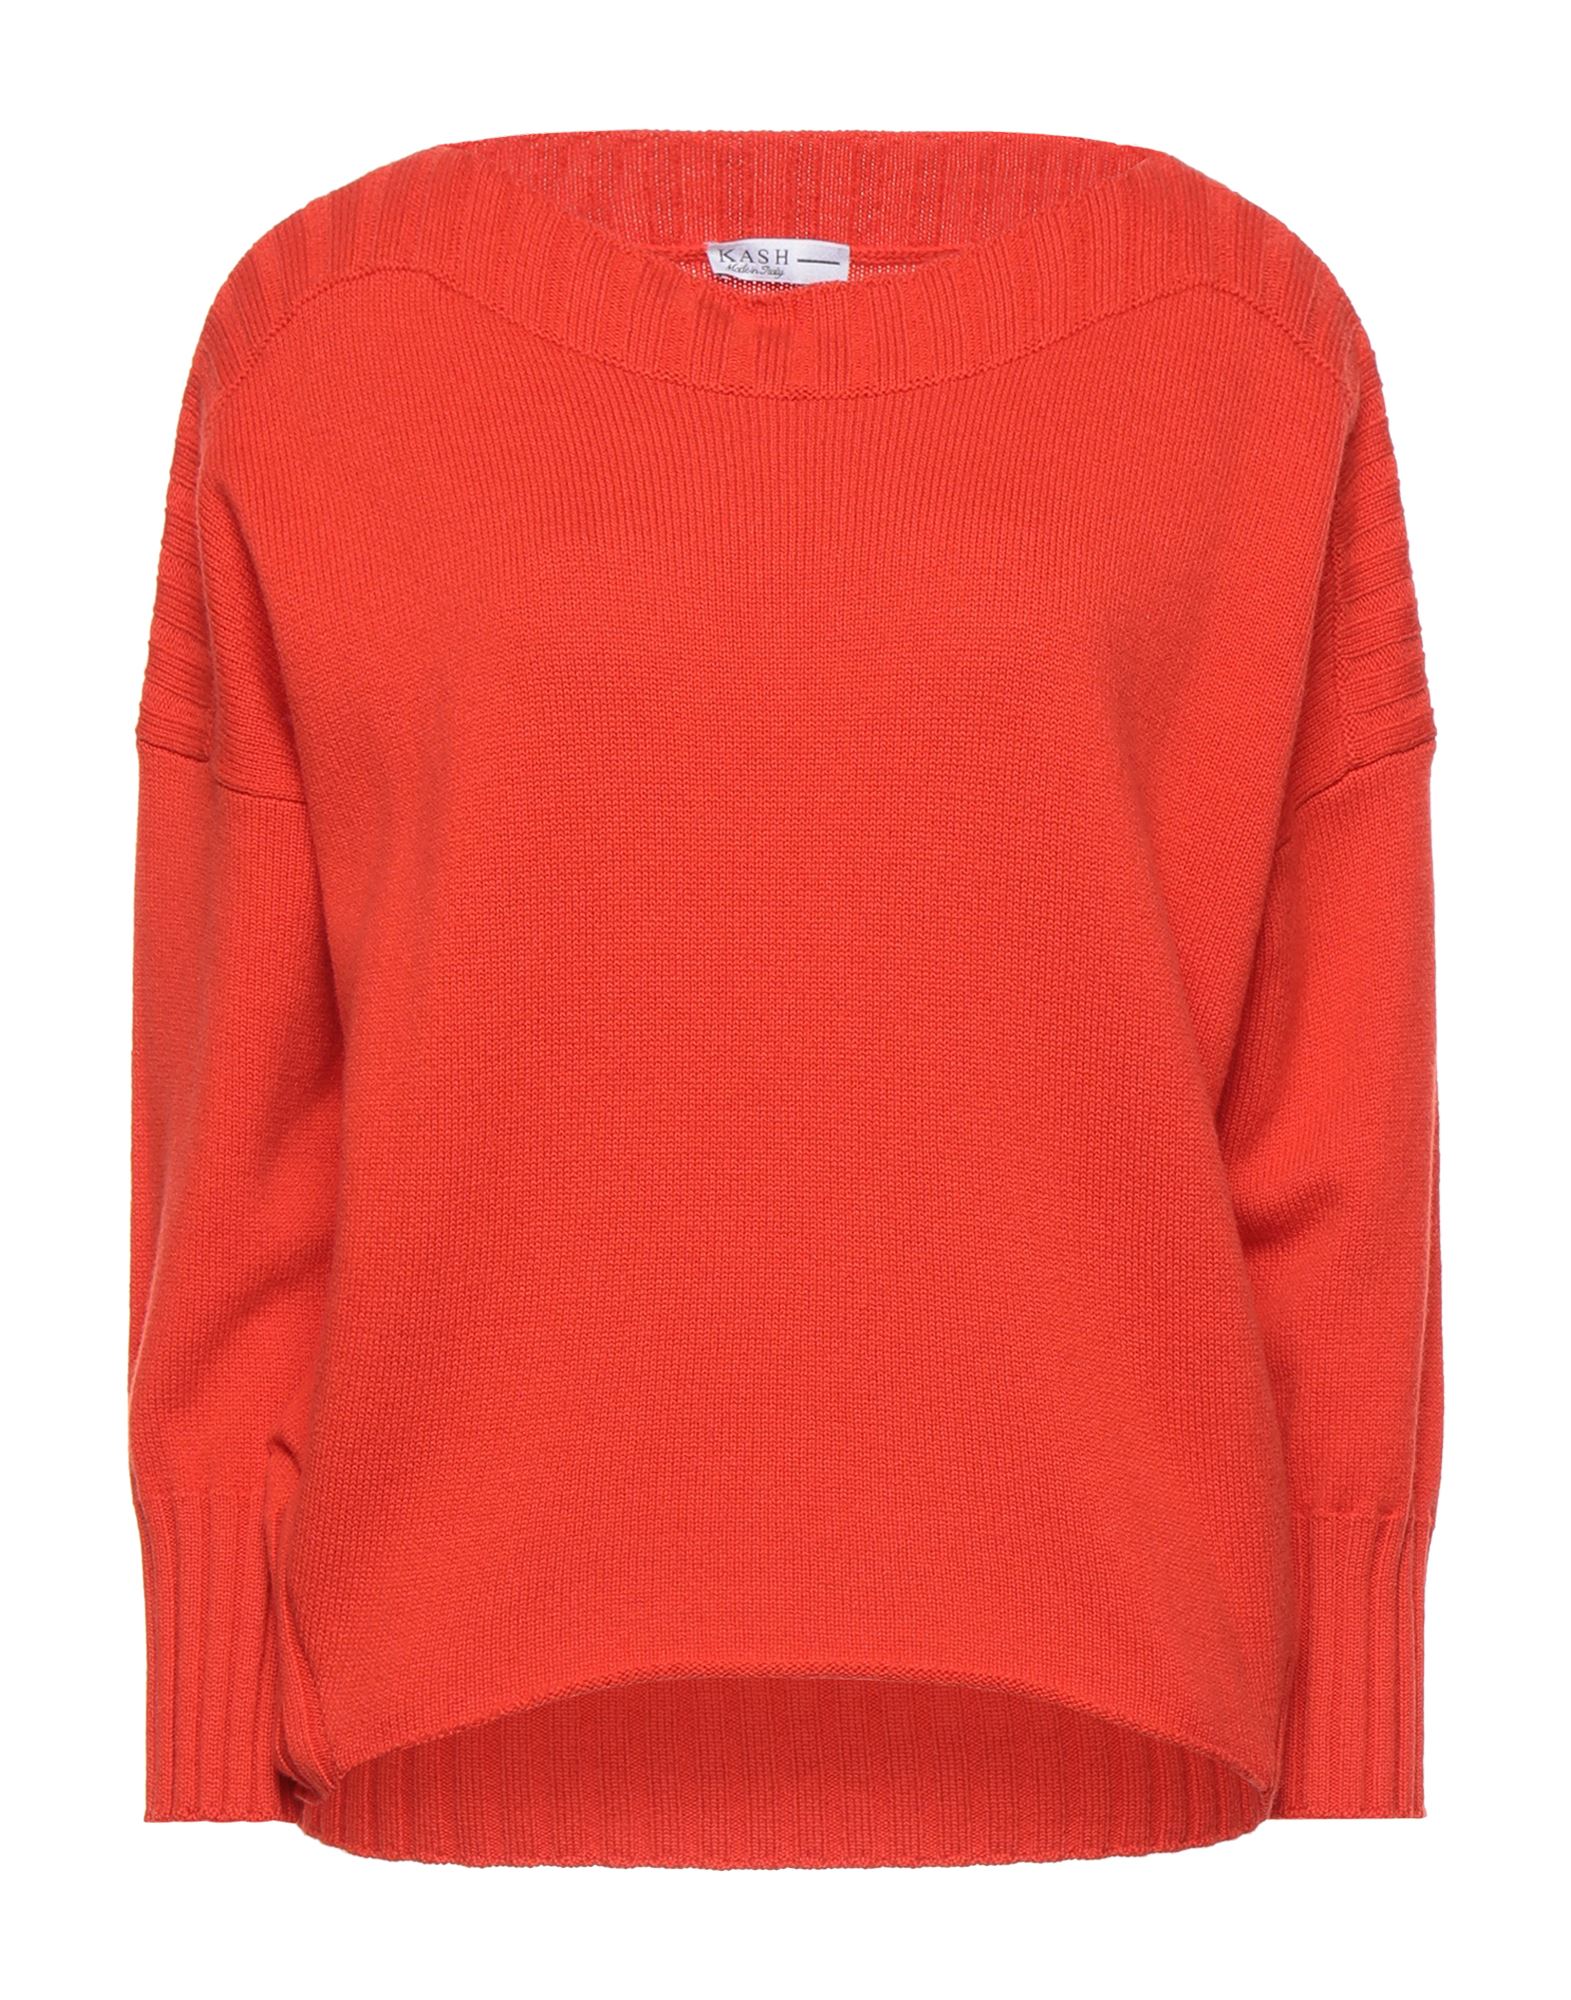 Kash Sweaters In Orange